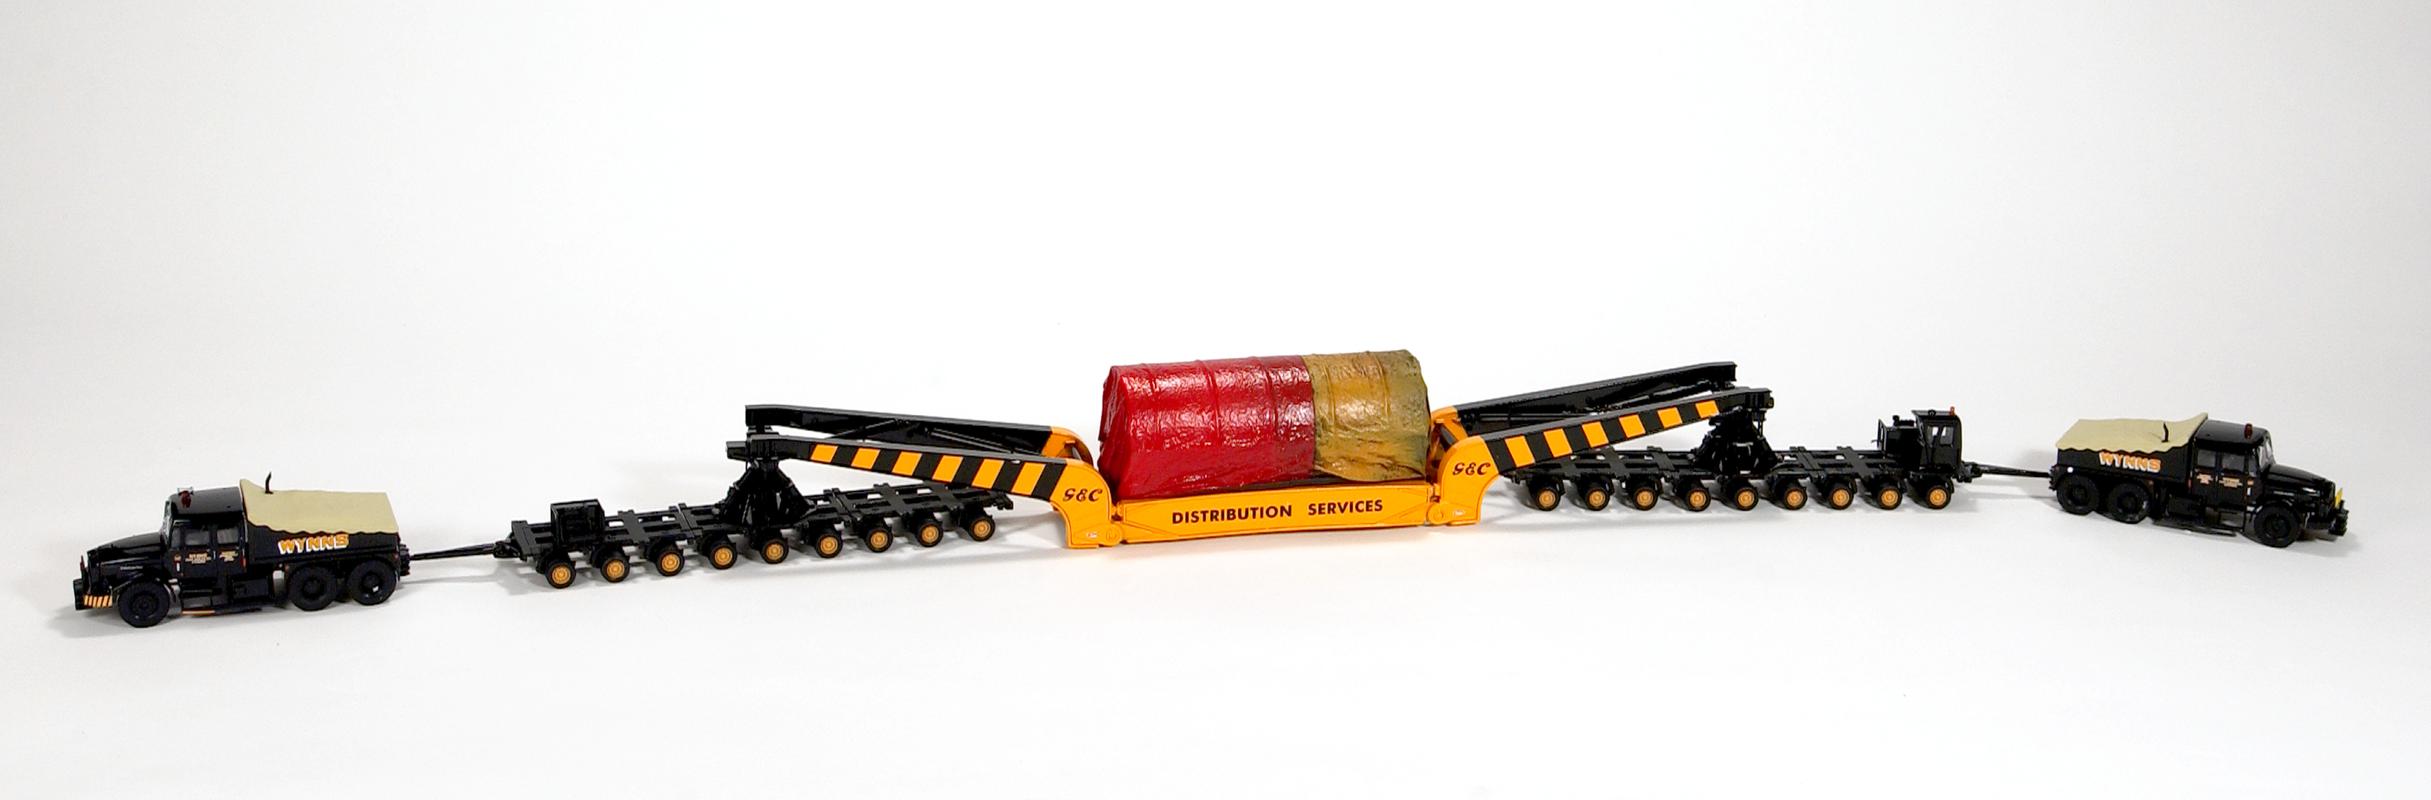 Wynn's Heavy Road Haulage train with stator load